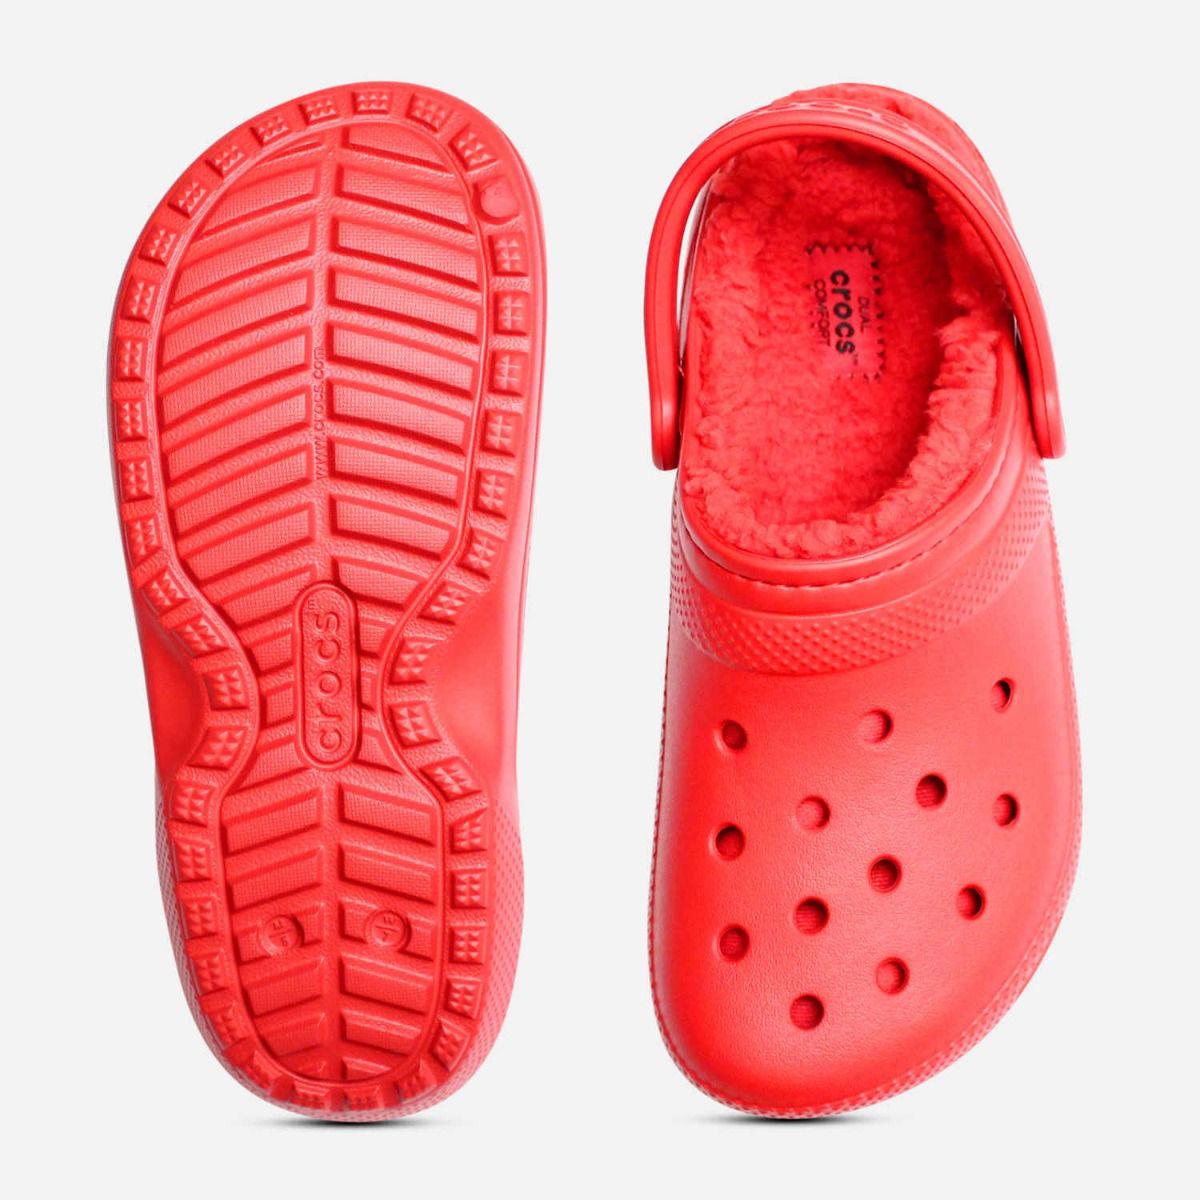 red fur lined crocs